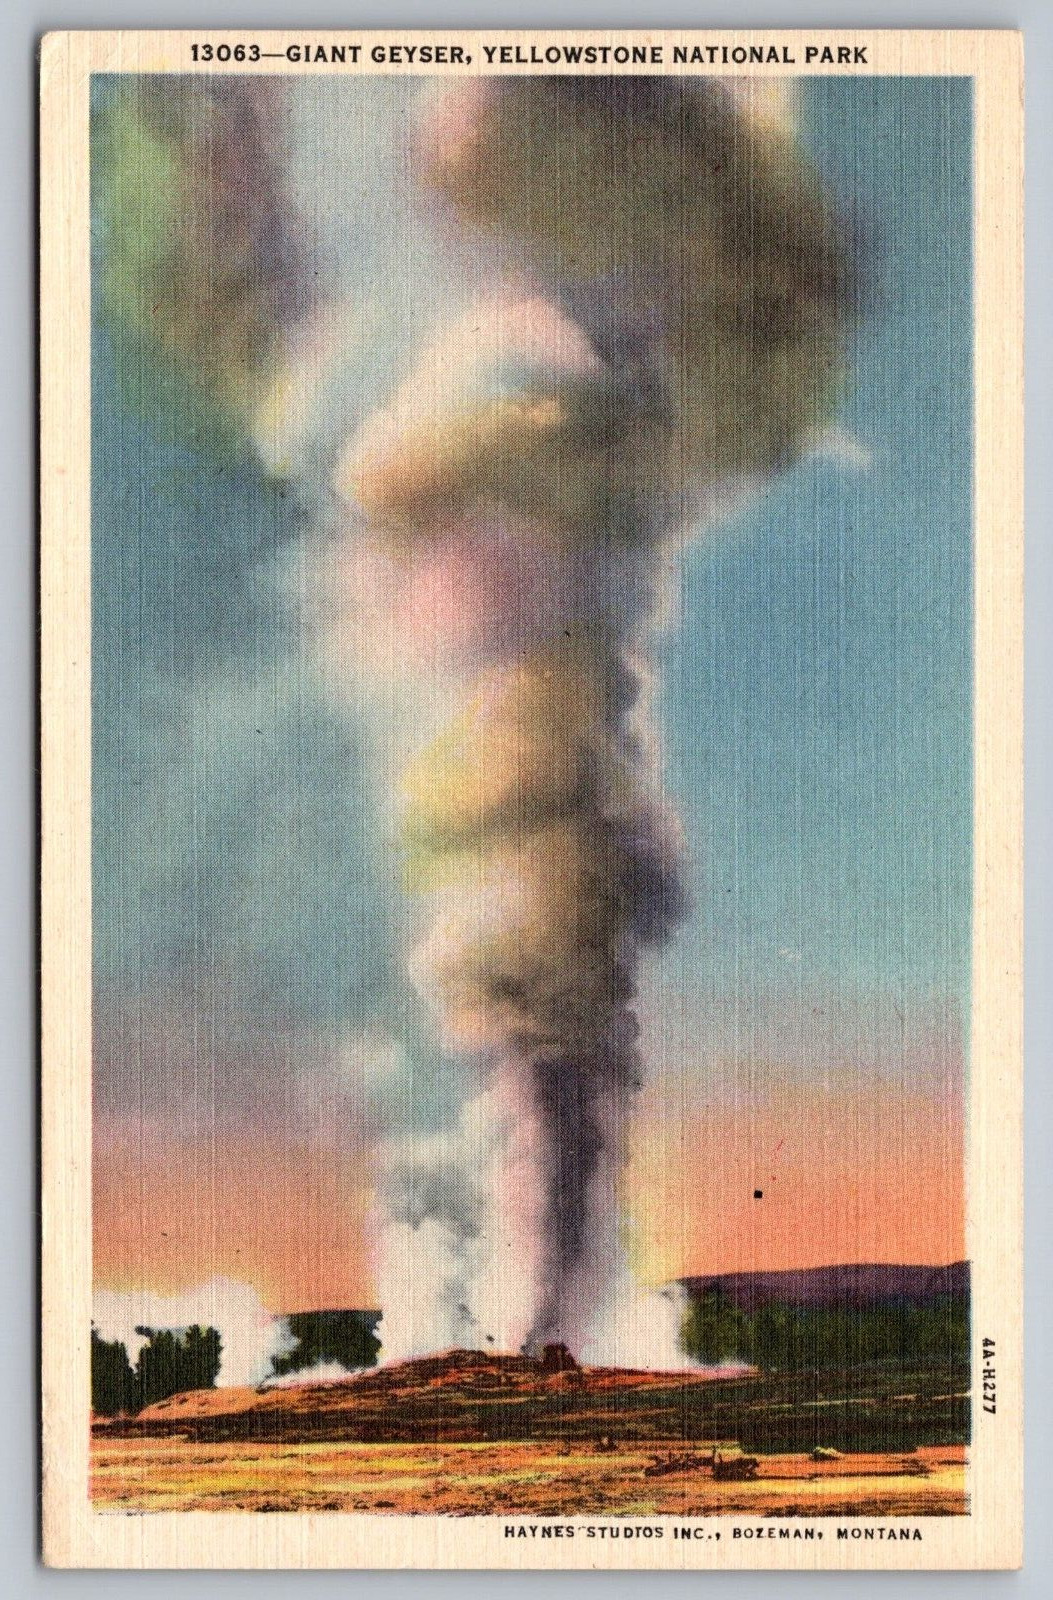 Giant Geyser Yellowstone National Park Vintage Postcard c1959